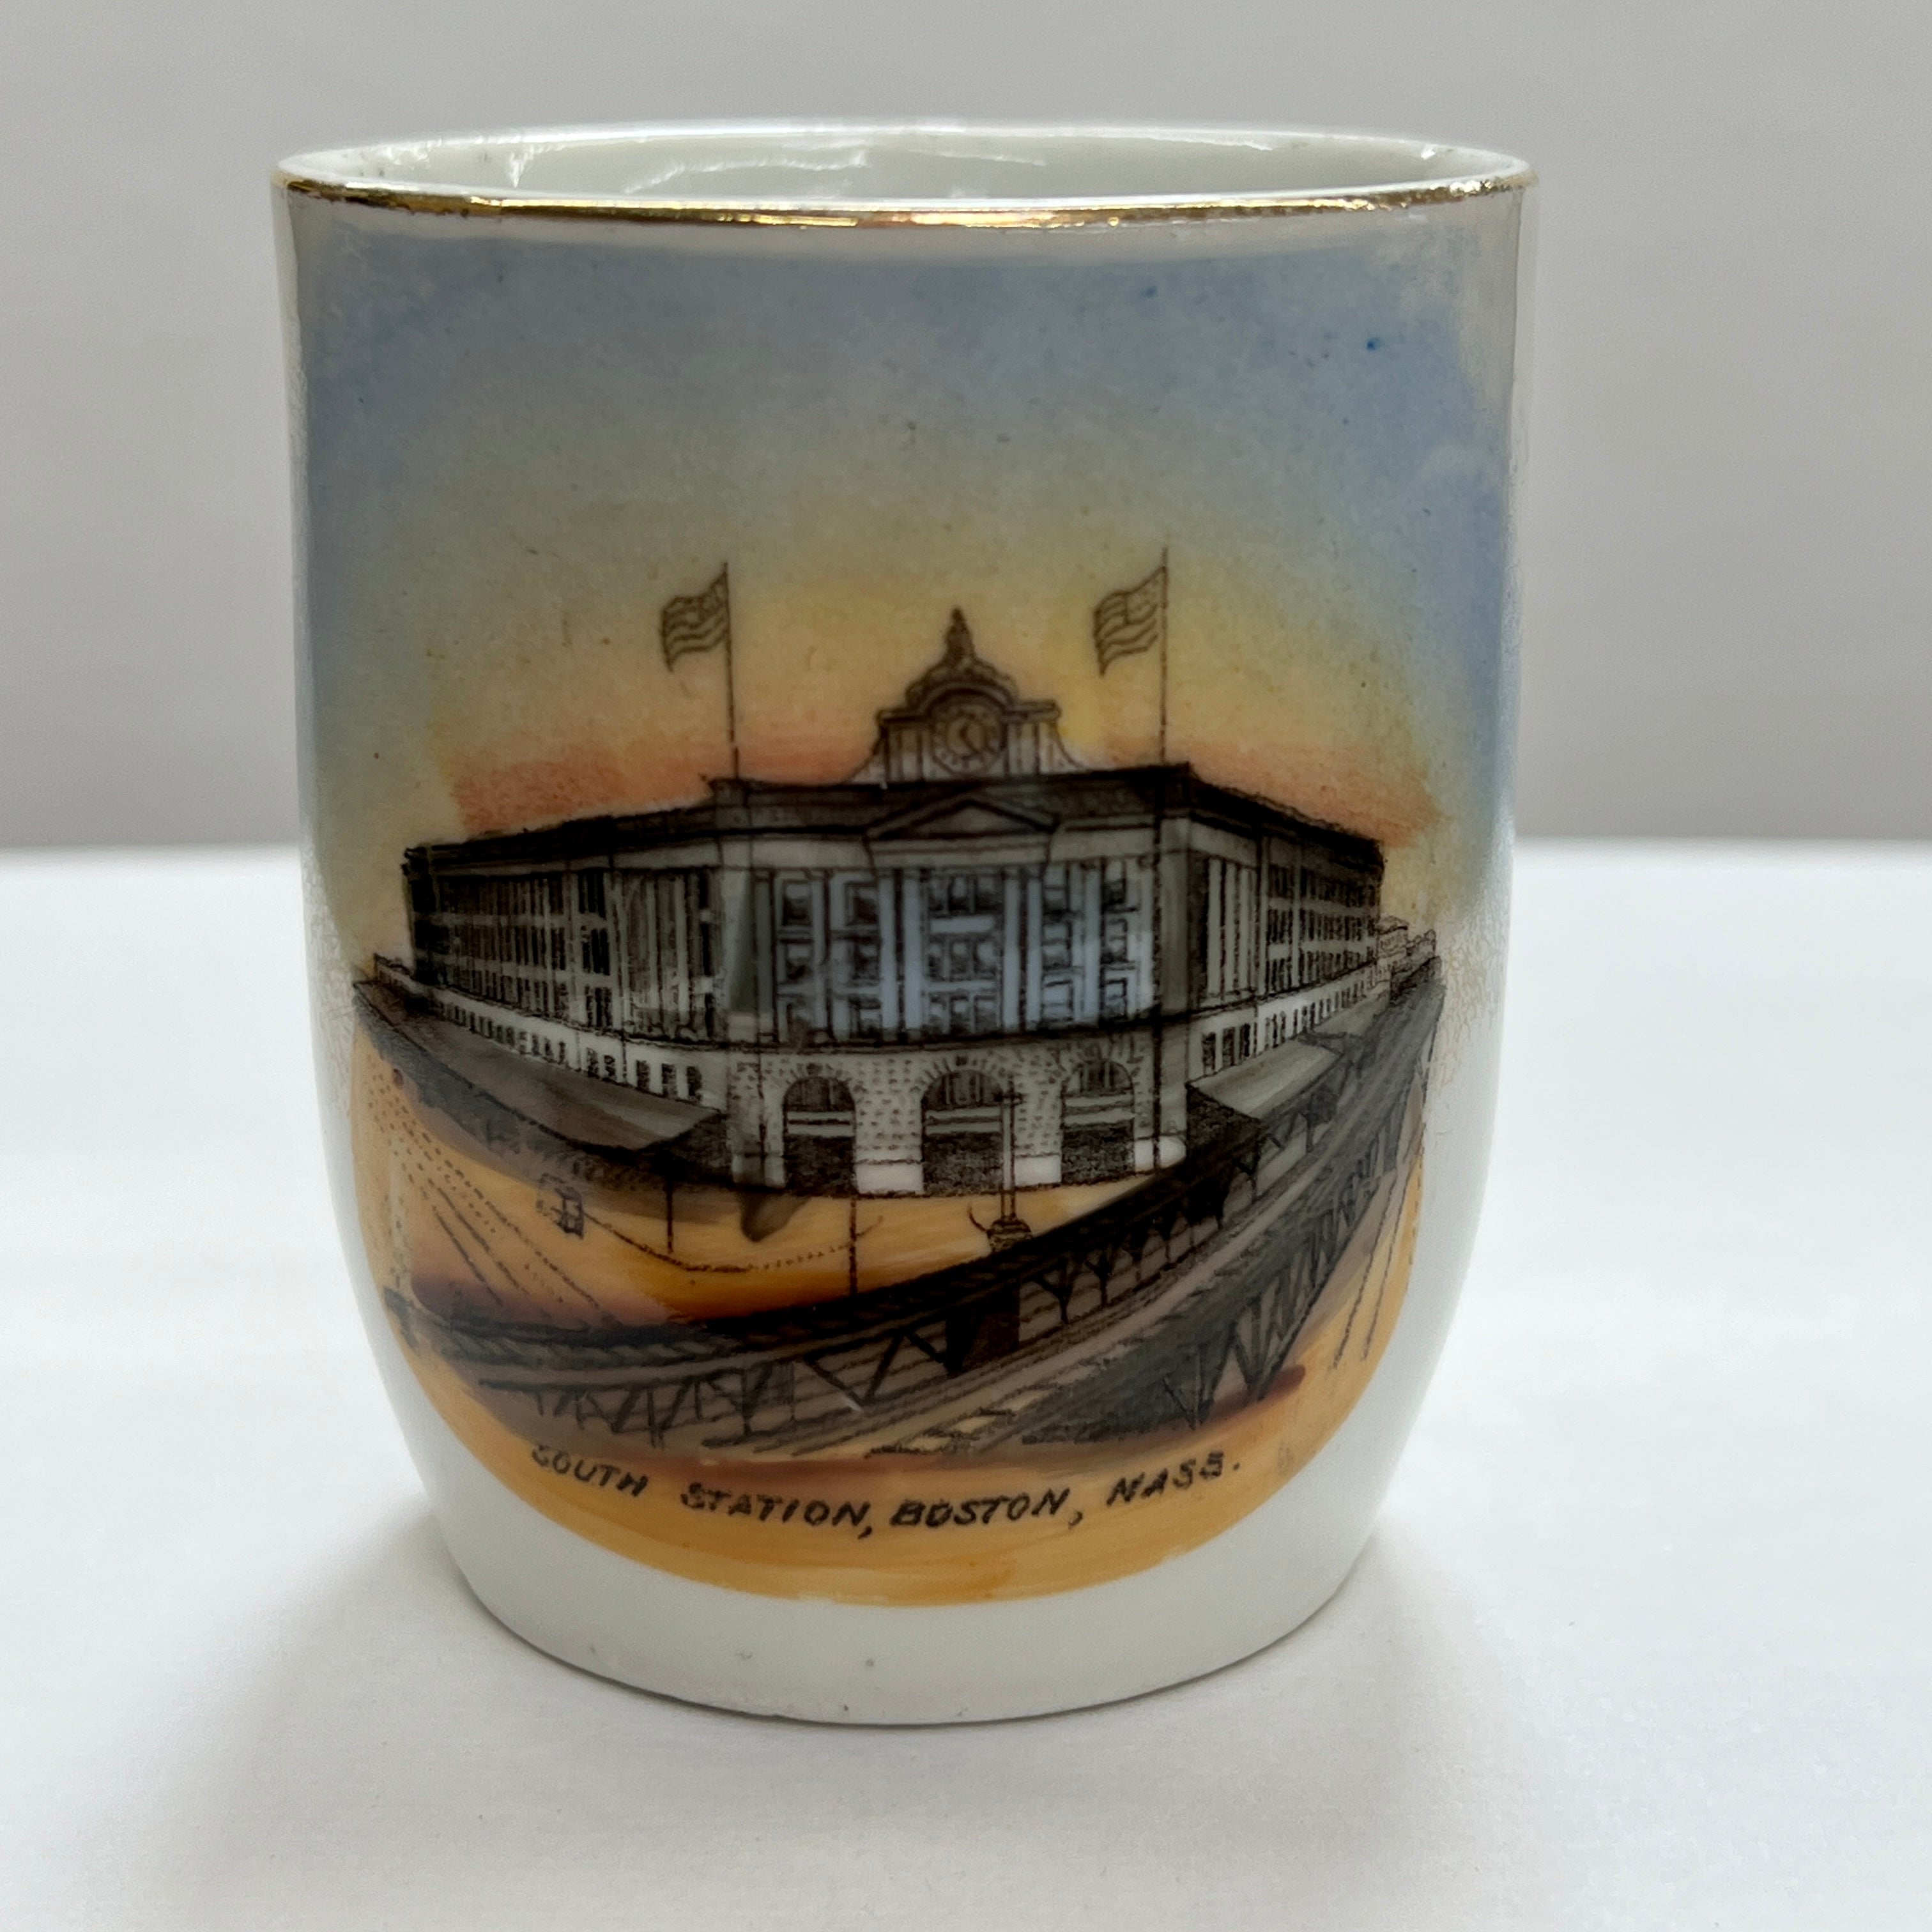 South Station (Boston, Massachusetts) Souvenir China Cup